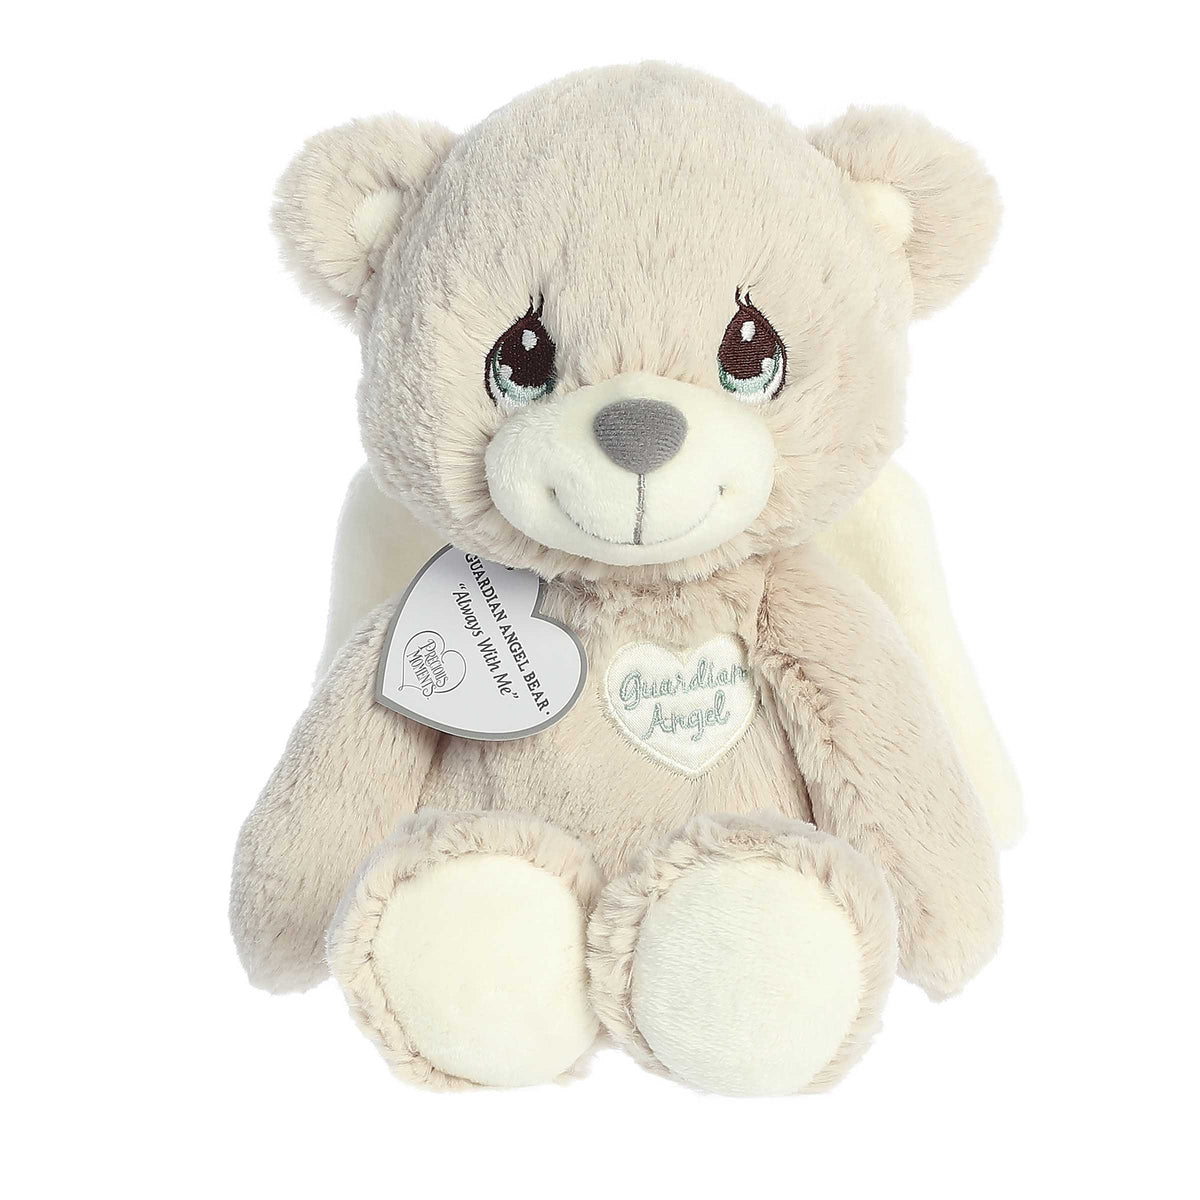 Light beige teddy bear stuffed animal with angel wings and sweet sleepy embroidered eyes